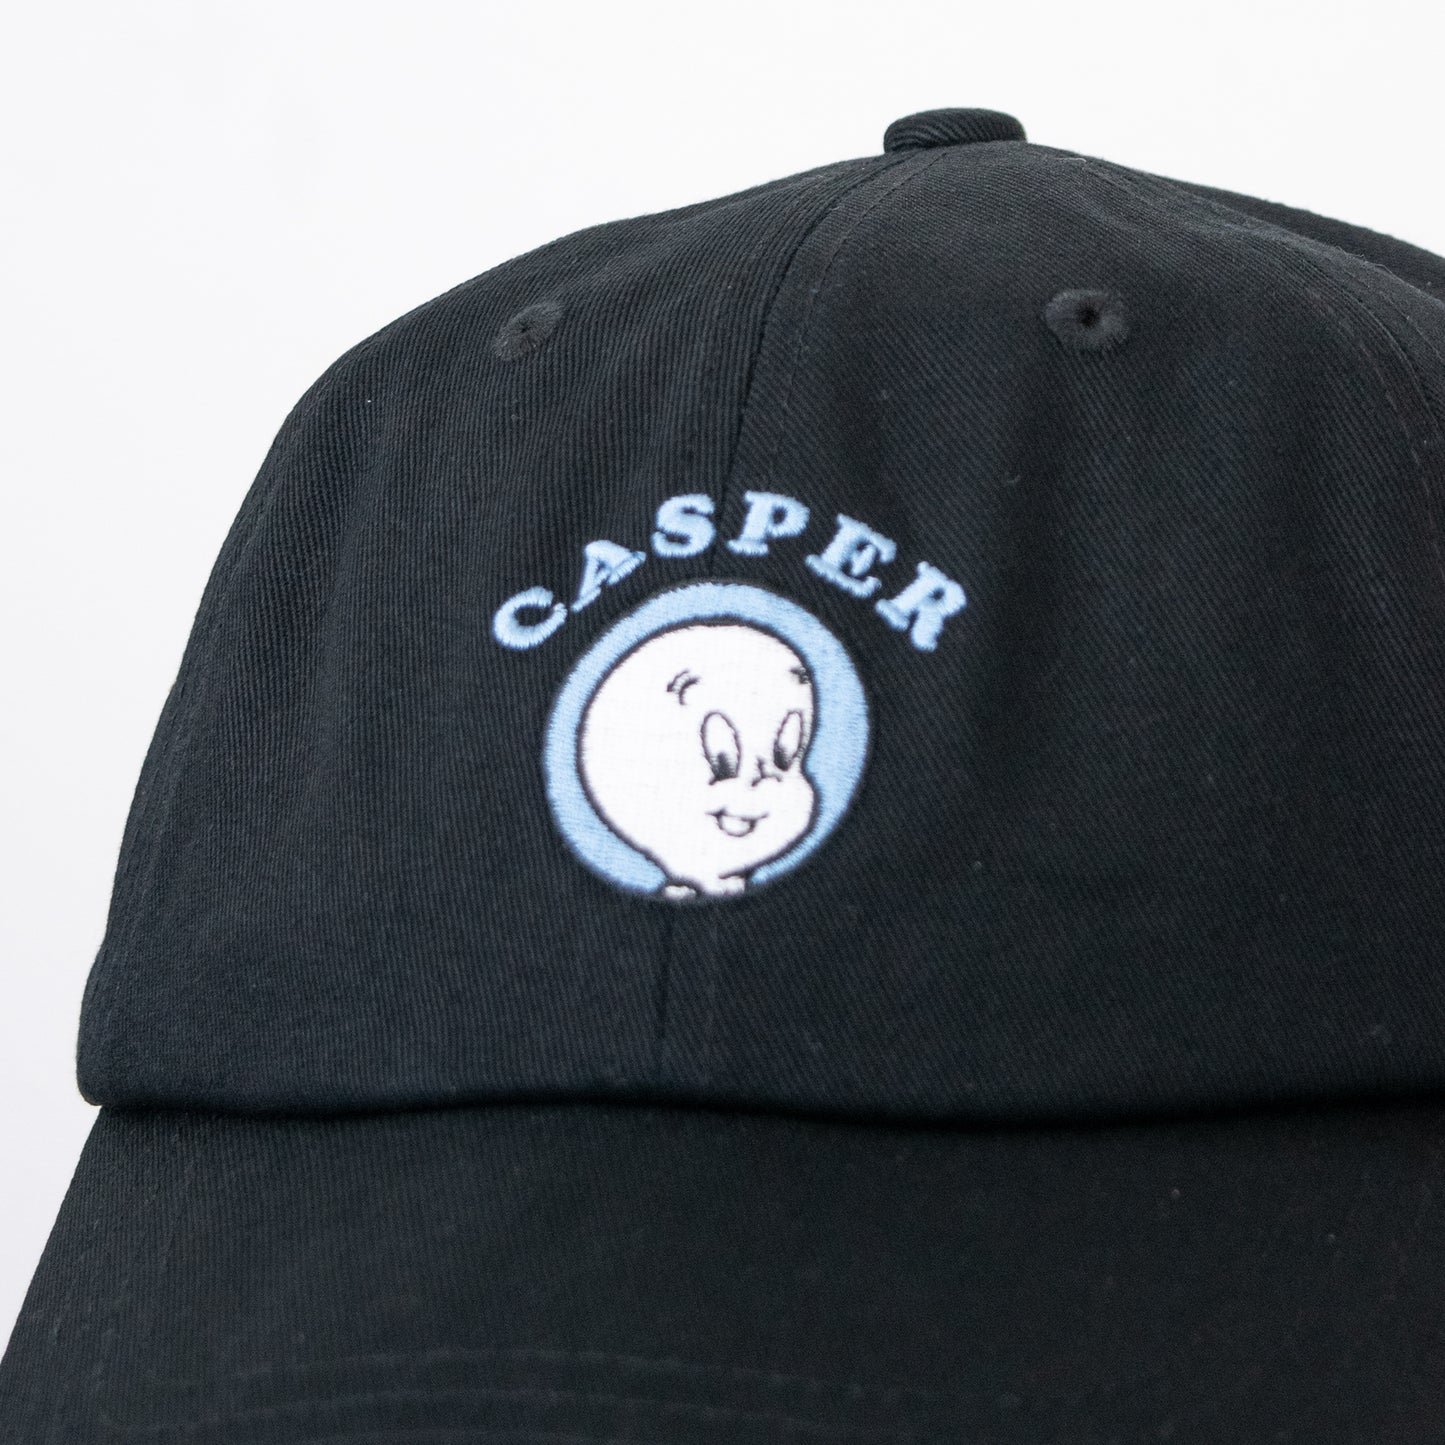 Casper キャスパー 刺繍 キャップ BLACK